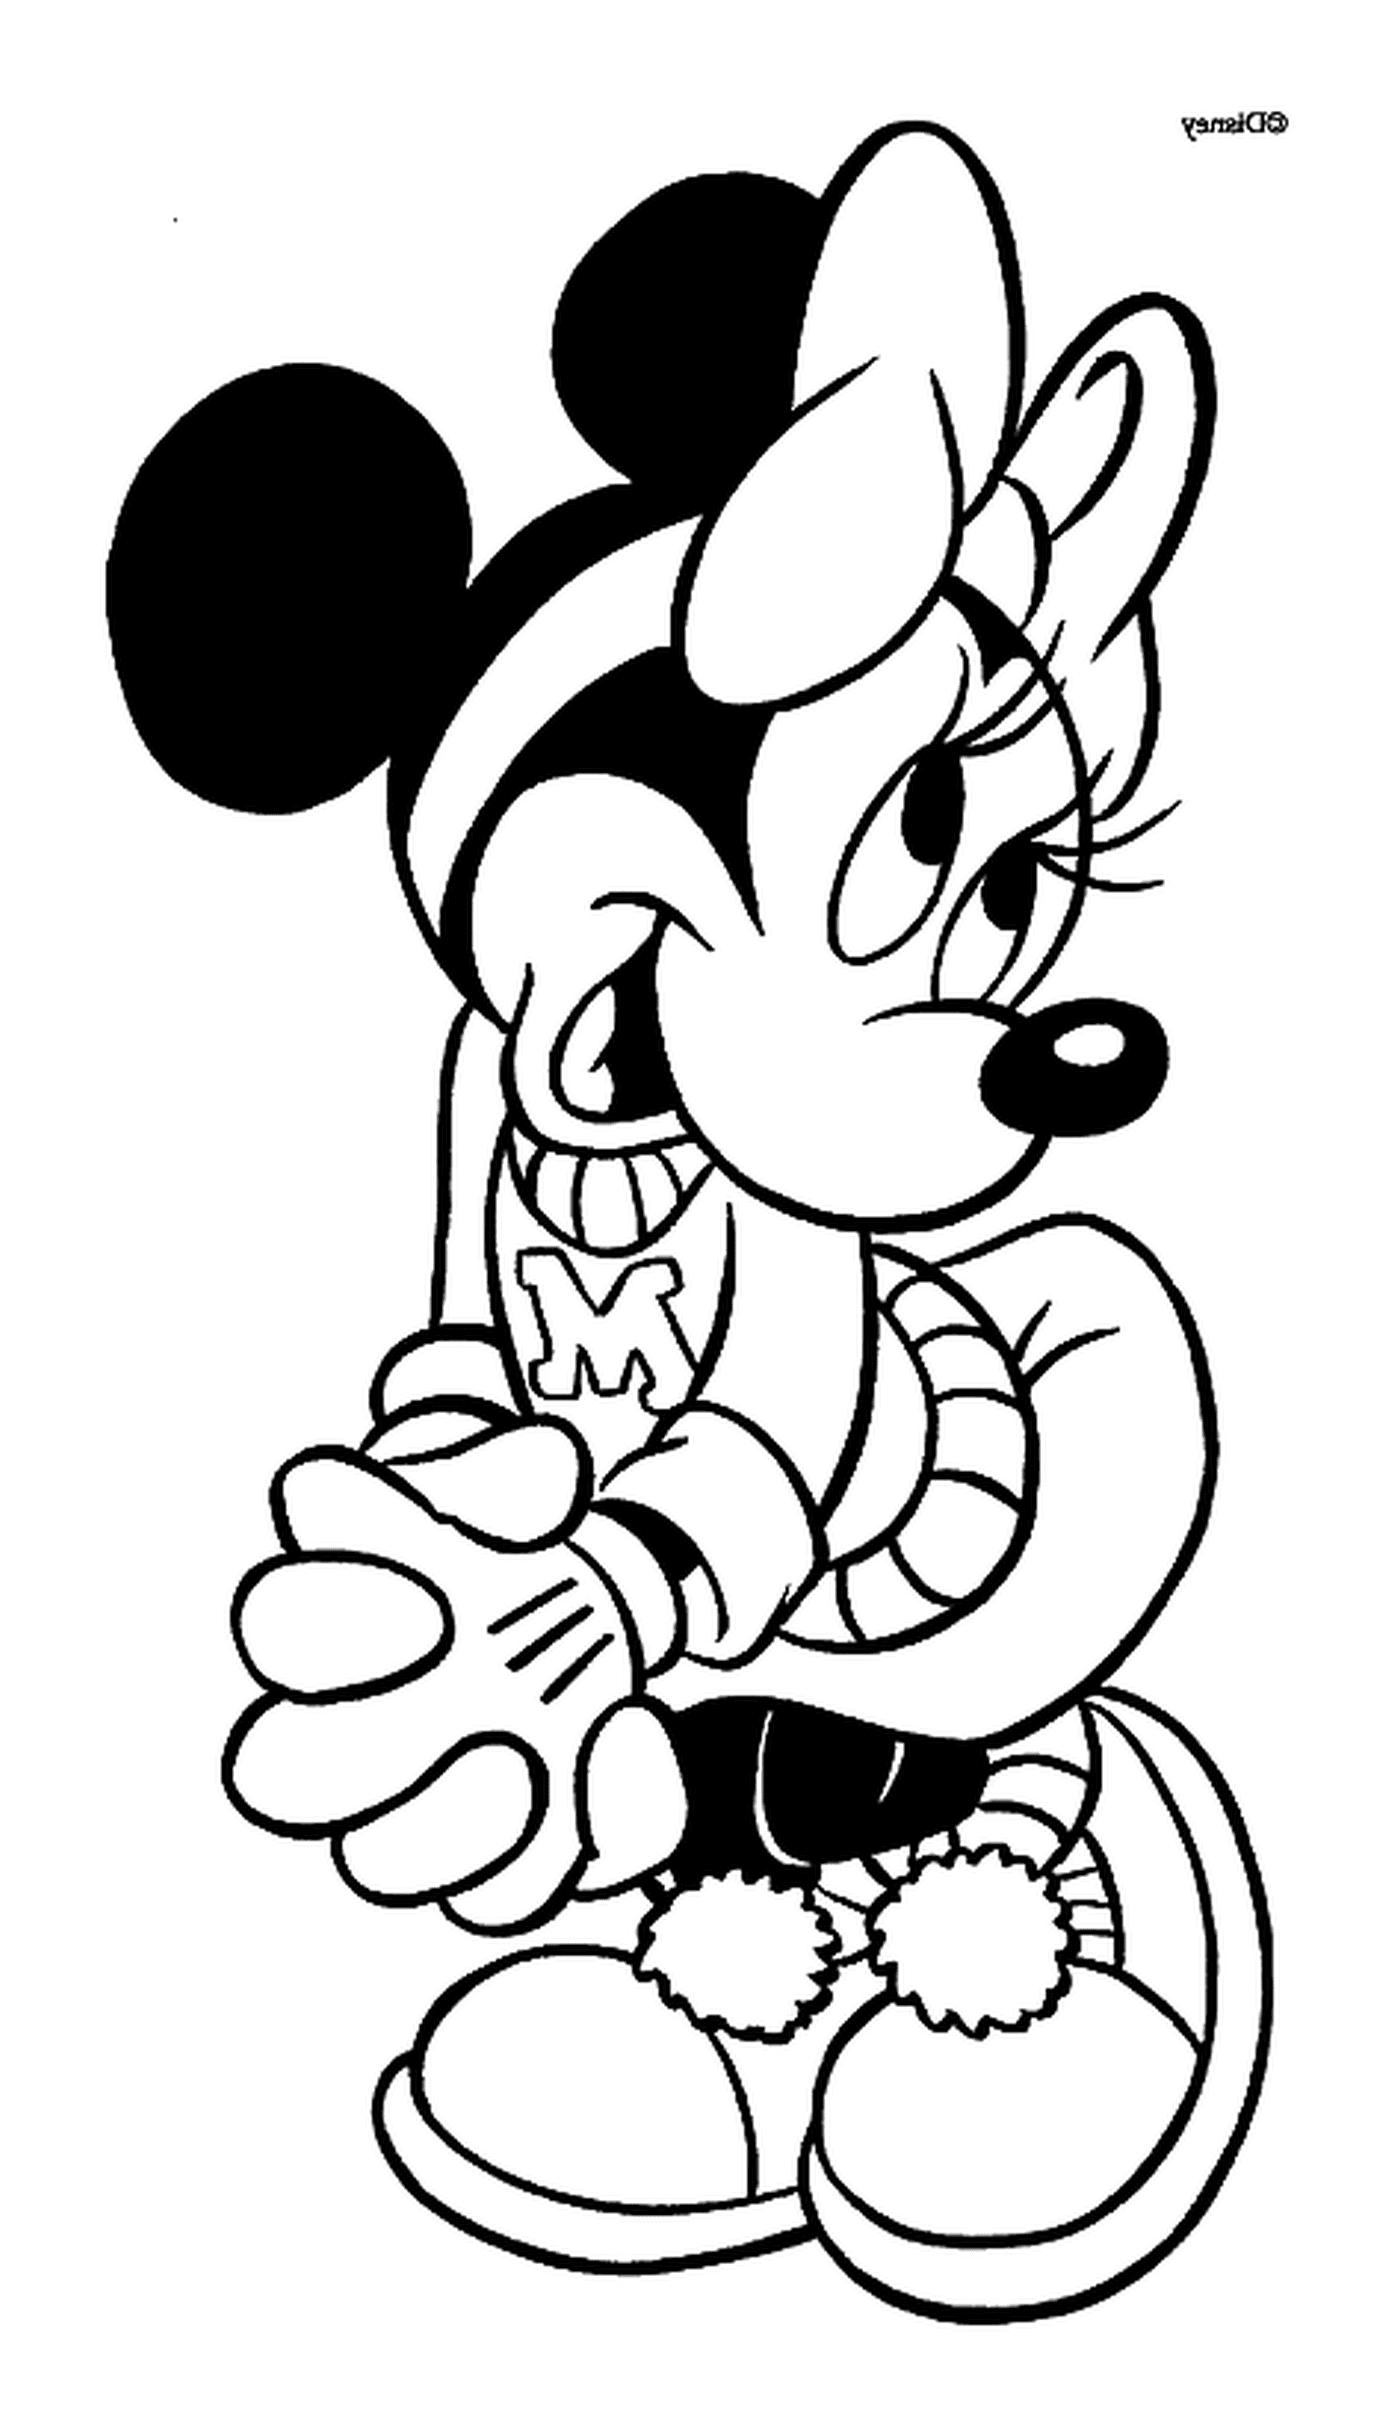  Minnie es un ratón tímido 